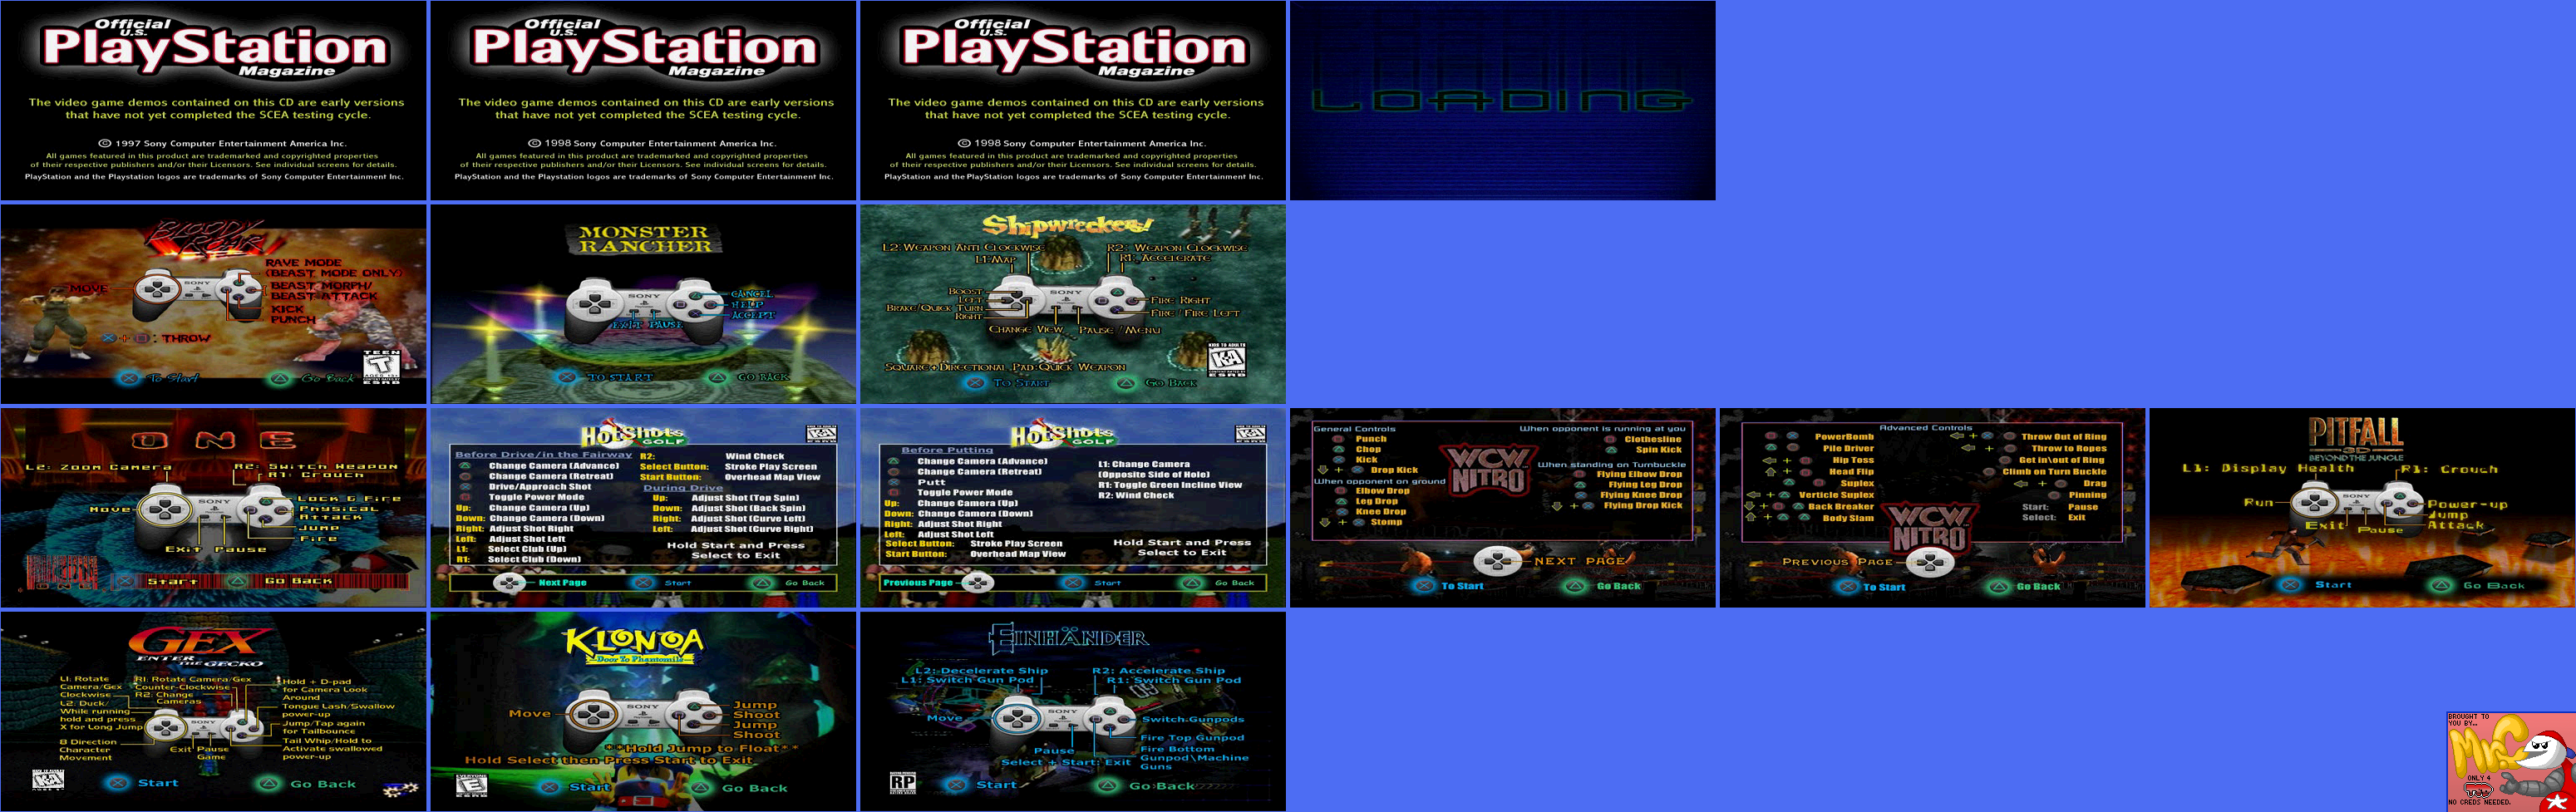 Official U.S. PlayStation Magazine Demo Discs (USA) - Controls Screens (06-08)